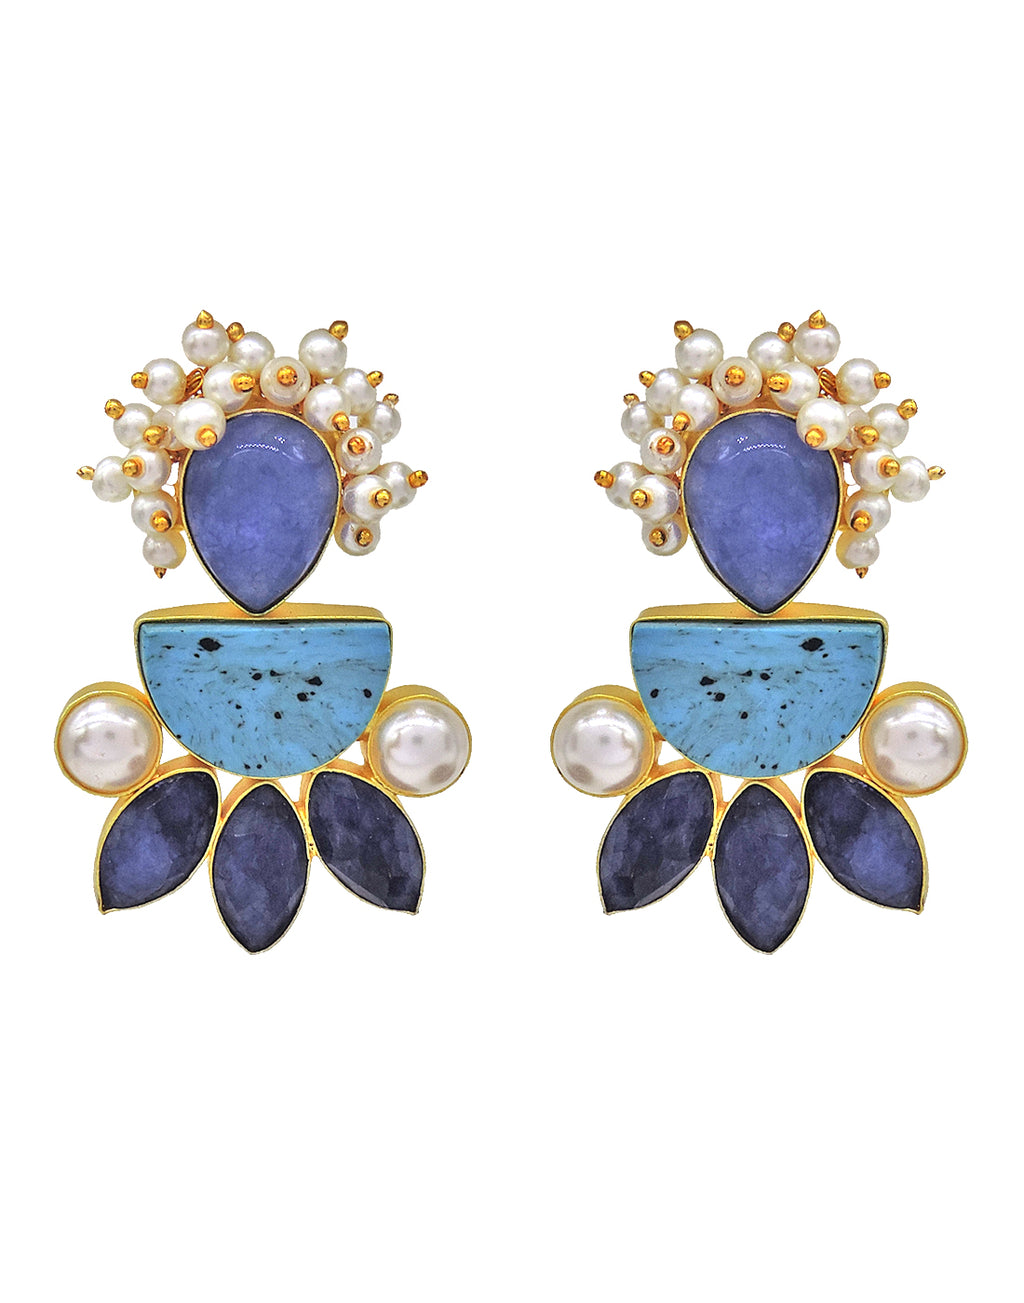 Azure Tone Earrings - Statement Earrings - Gold-Plated & Hypoallergenic - Made in India - Dubai Jewellery - Dori